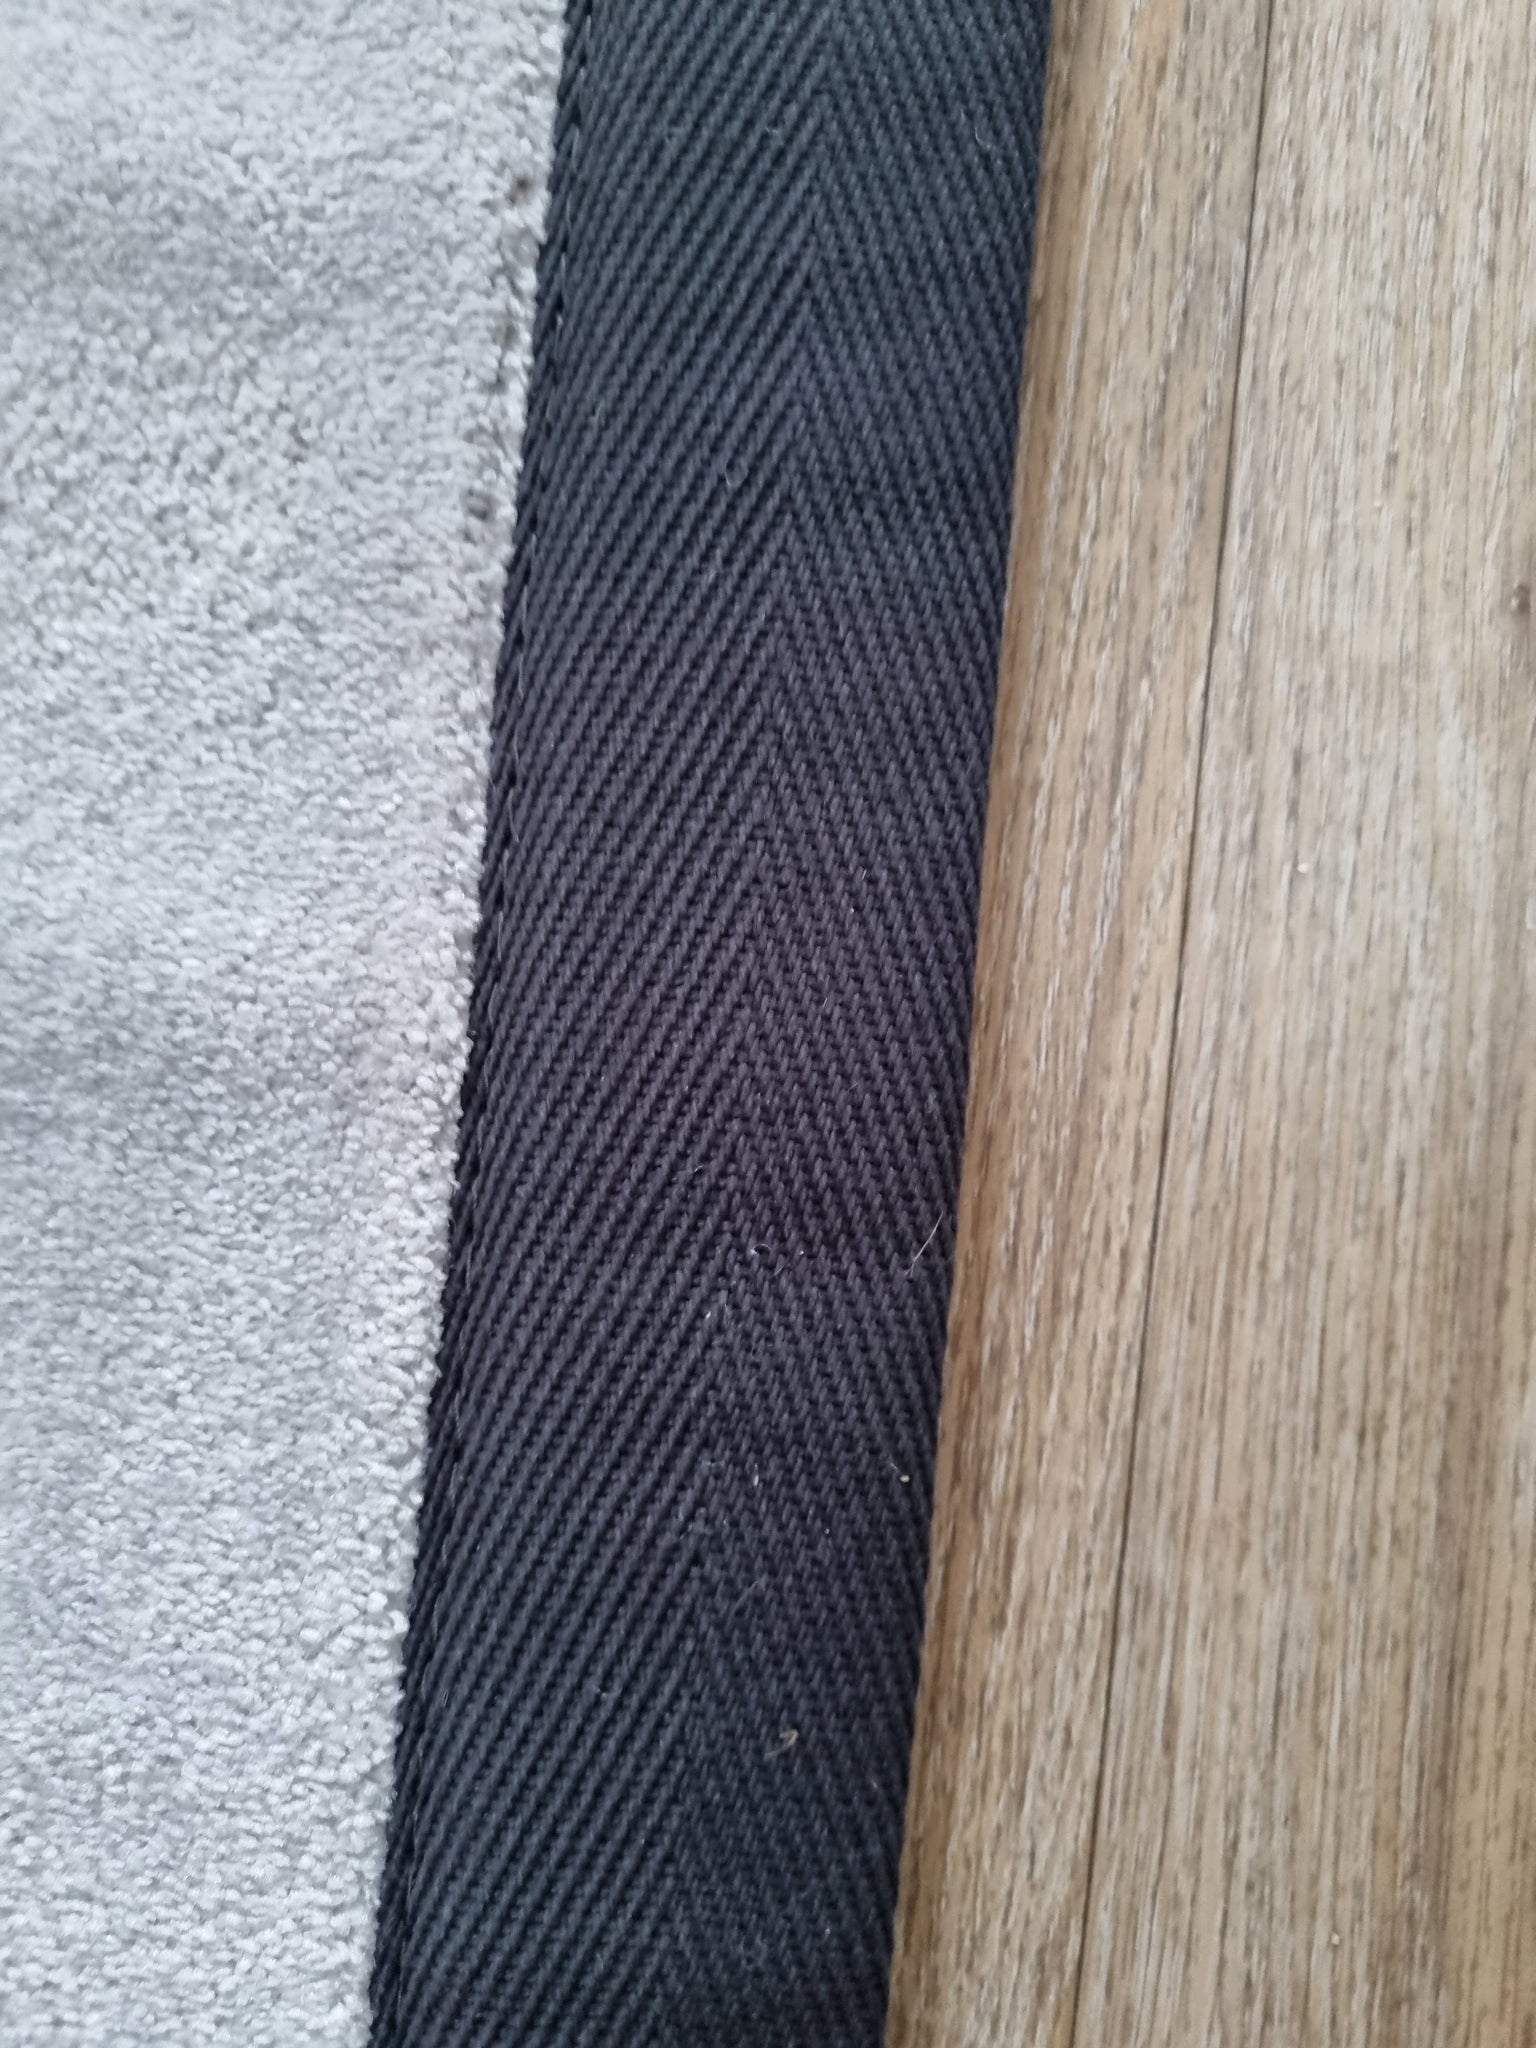 Elements Broadway nylon Mai Tai carpet stair runner with black herringbone border